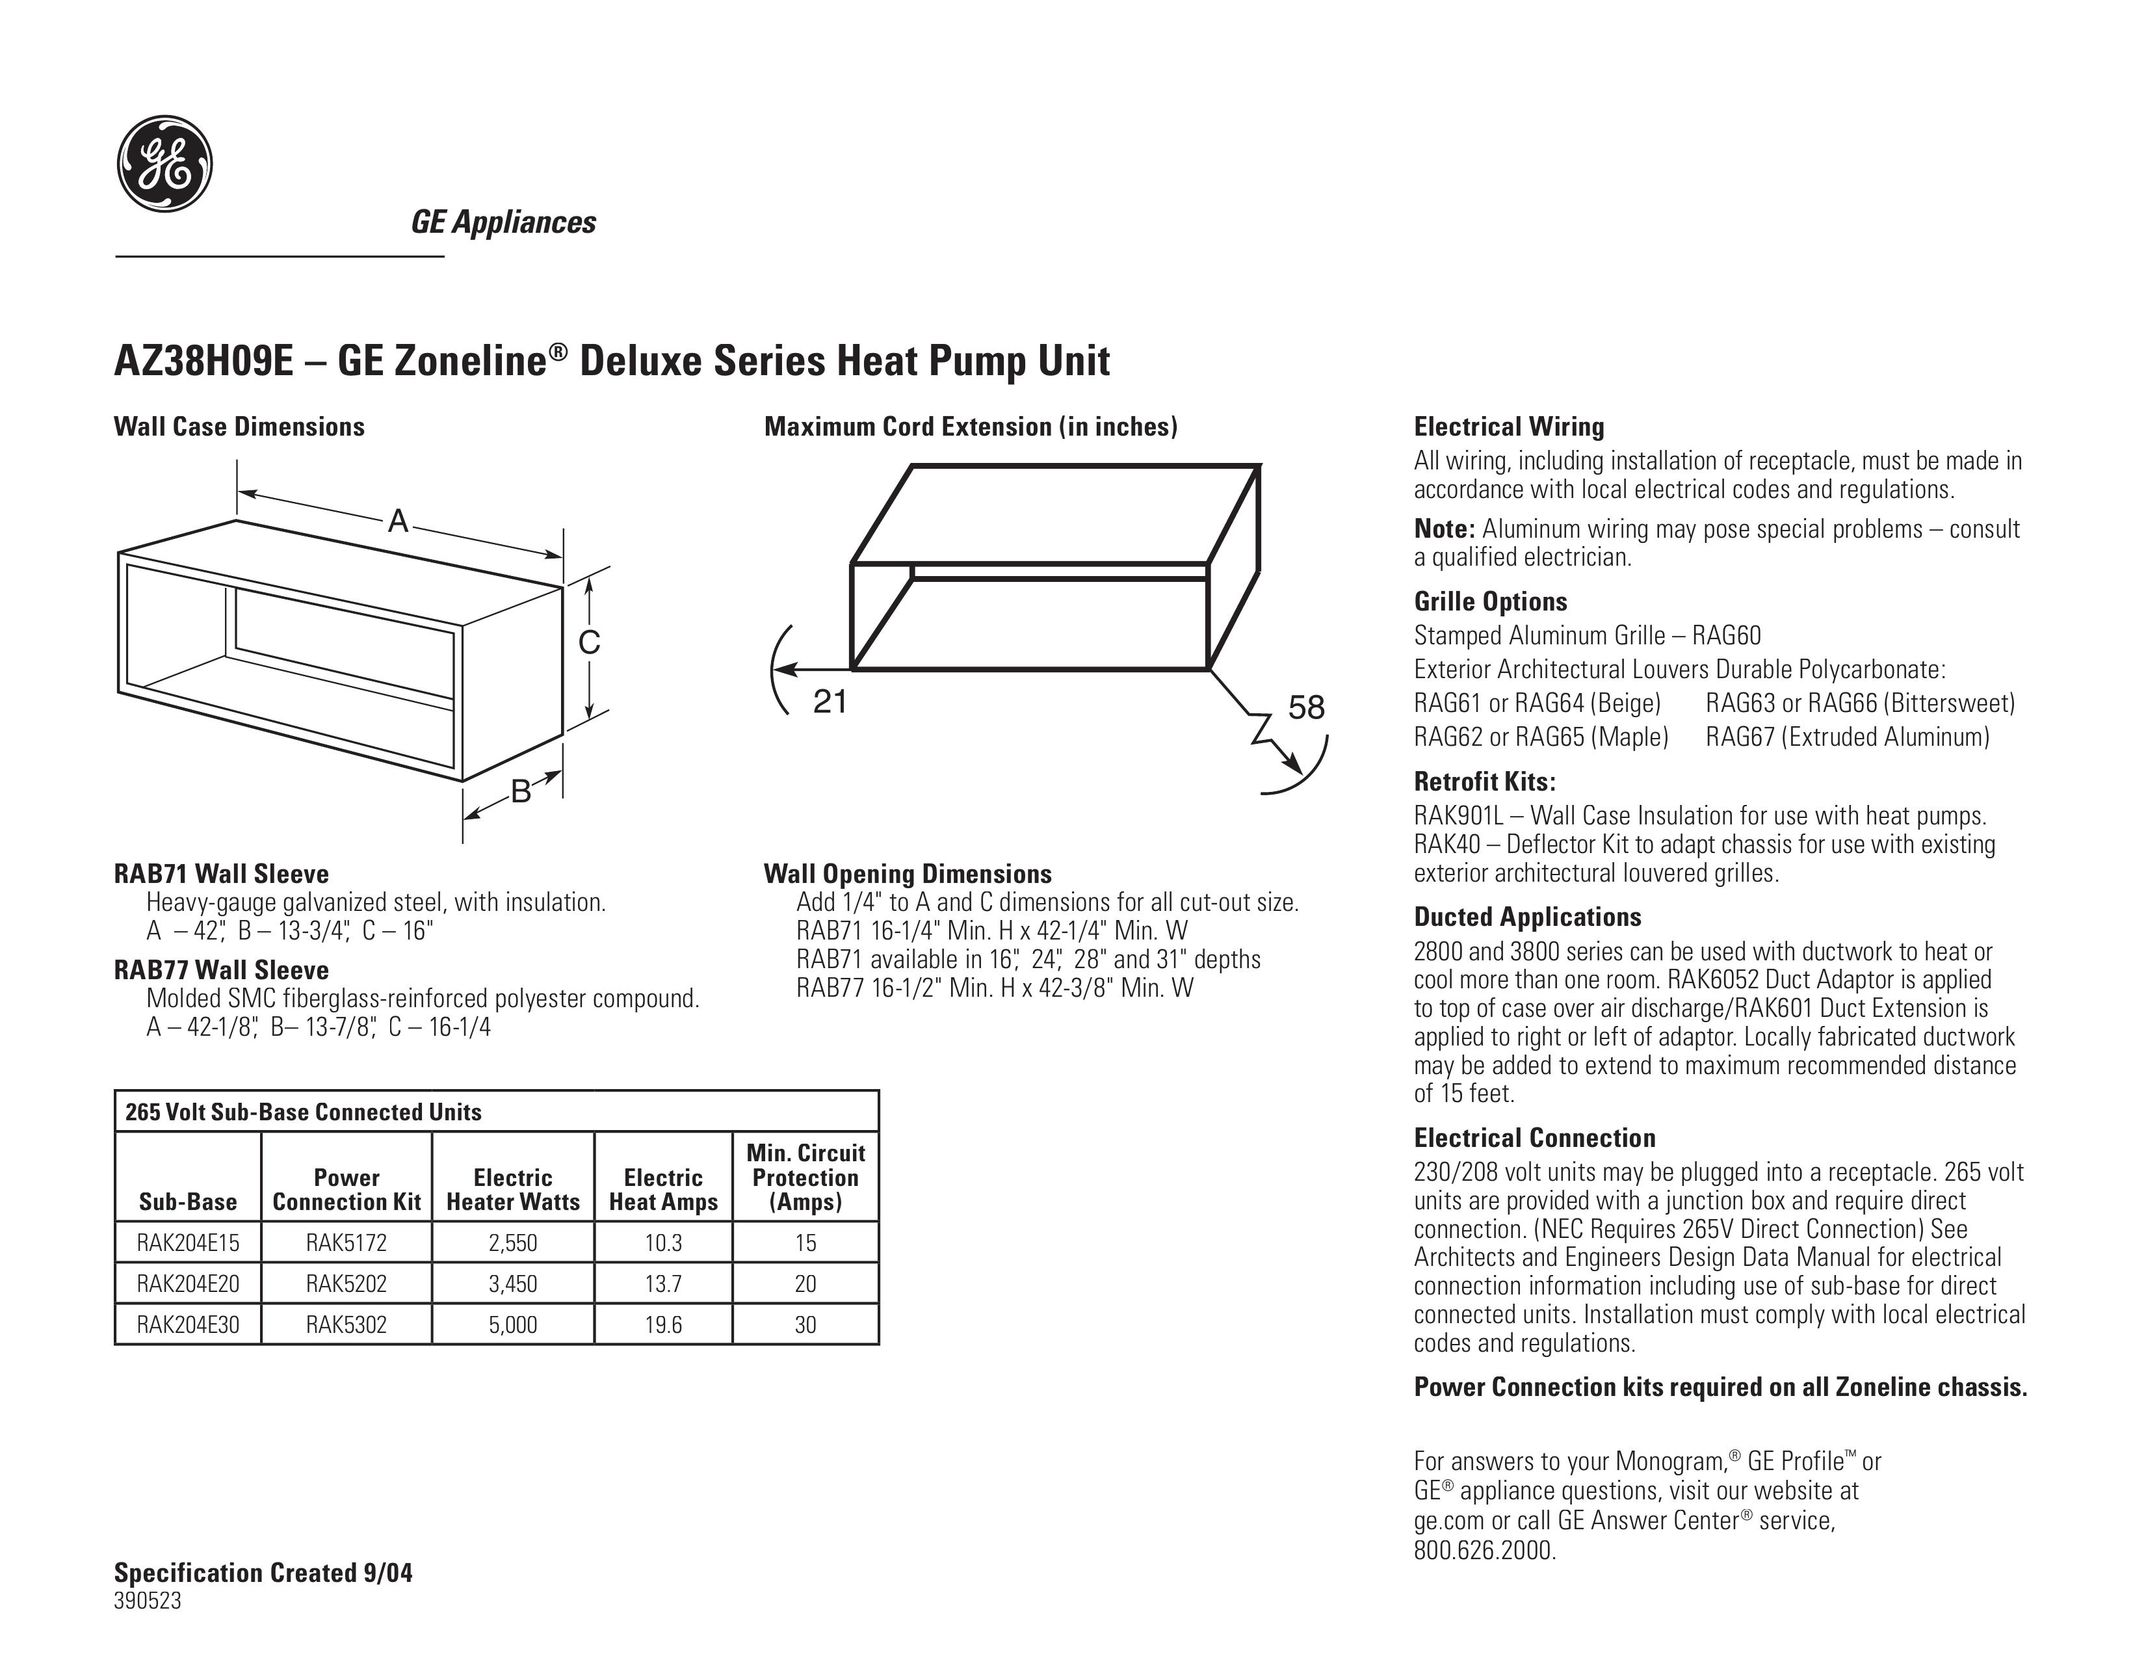 GE AZ38H09EAB Heat Pump User Manual